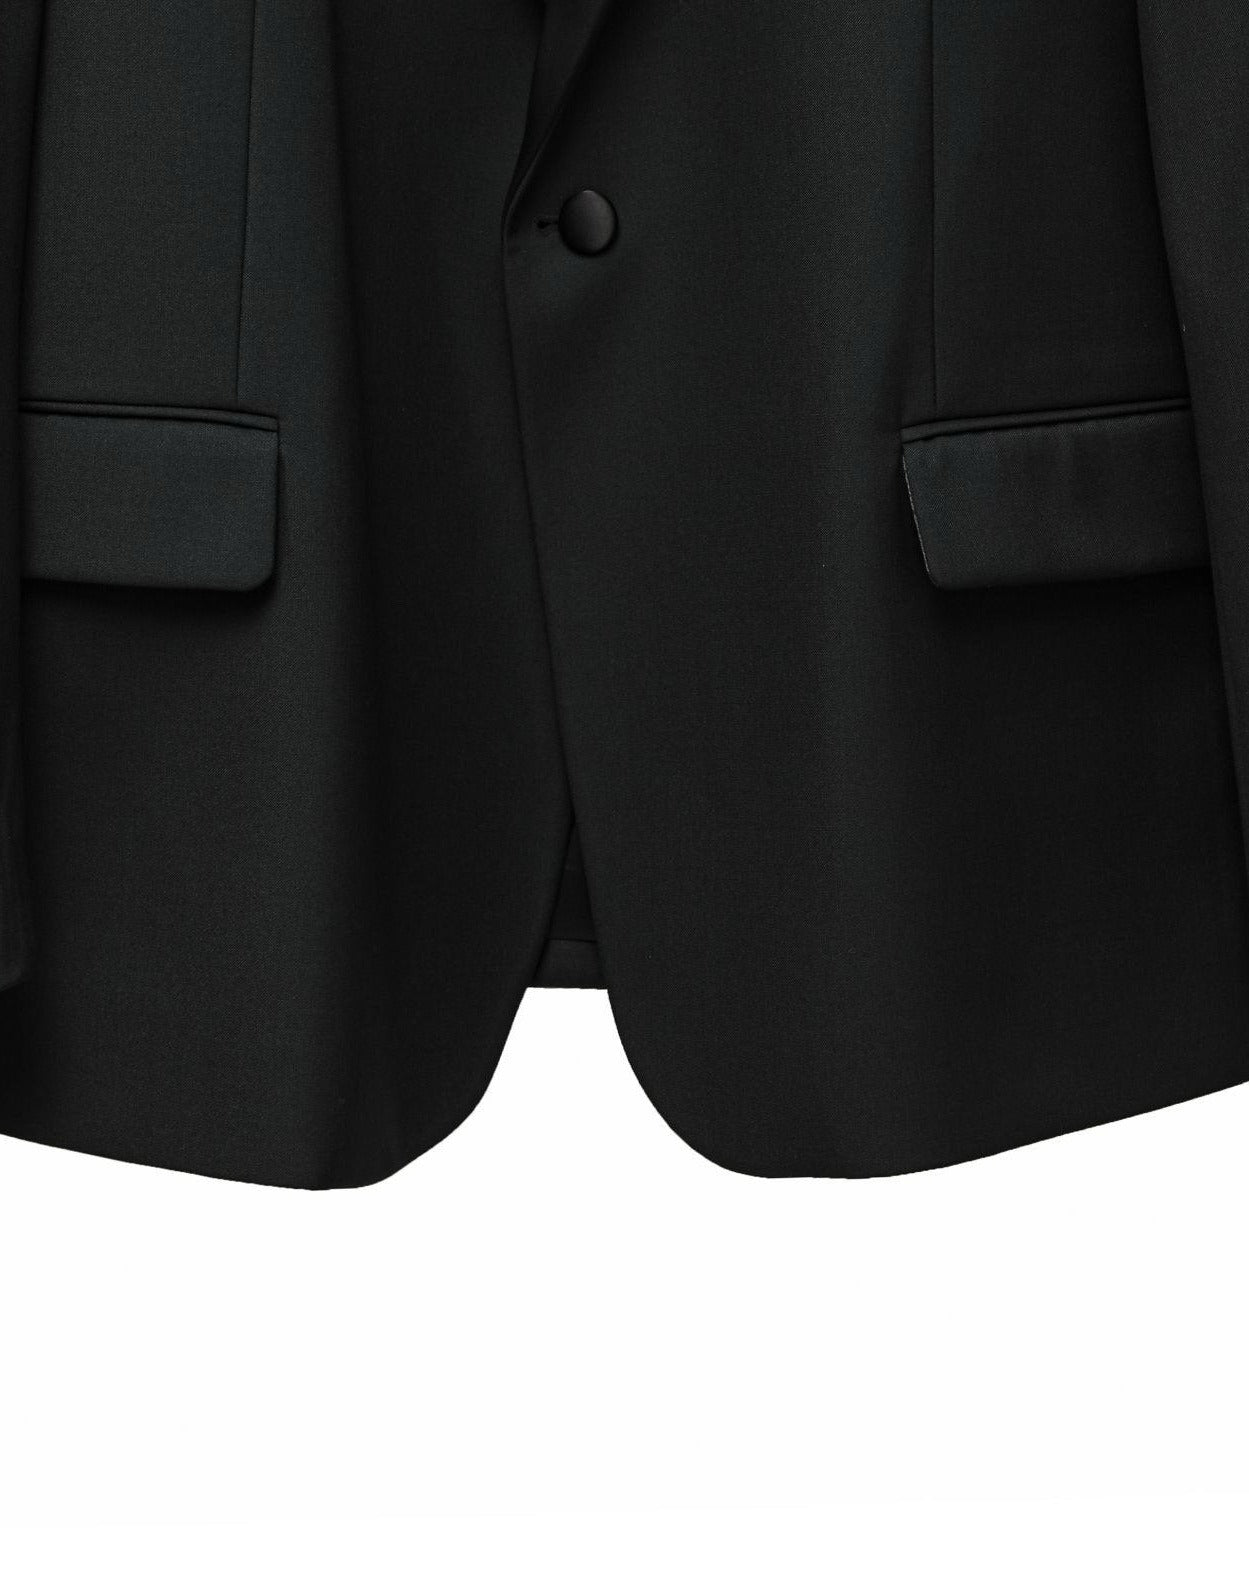 [PAPERMOON] SS / Oversized Silky Lapel Single Tuxedo Blazer